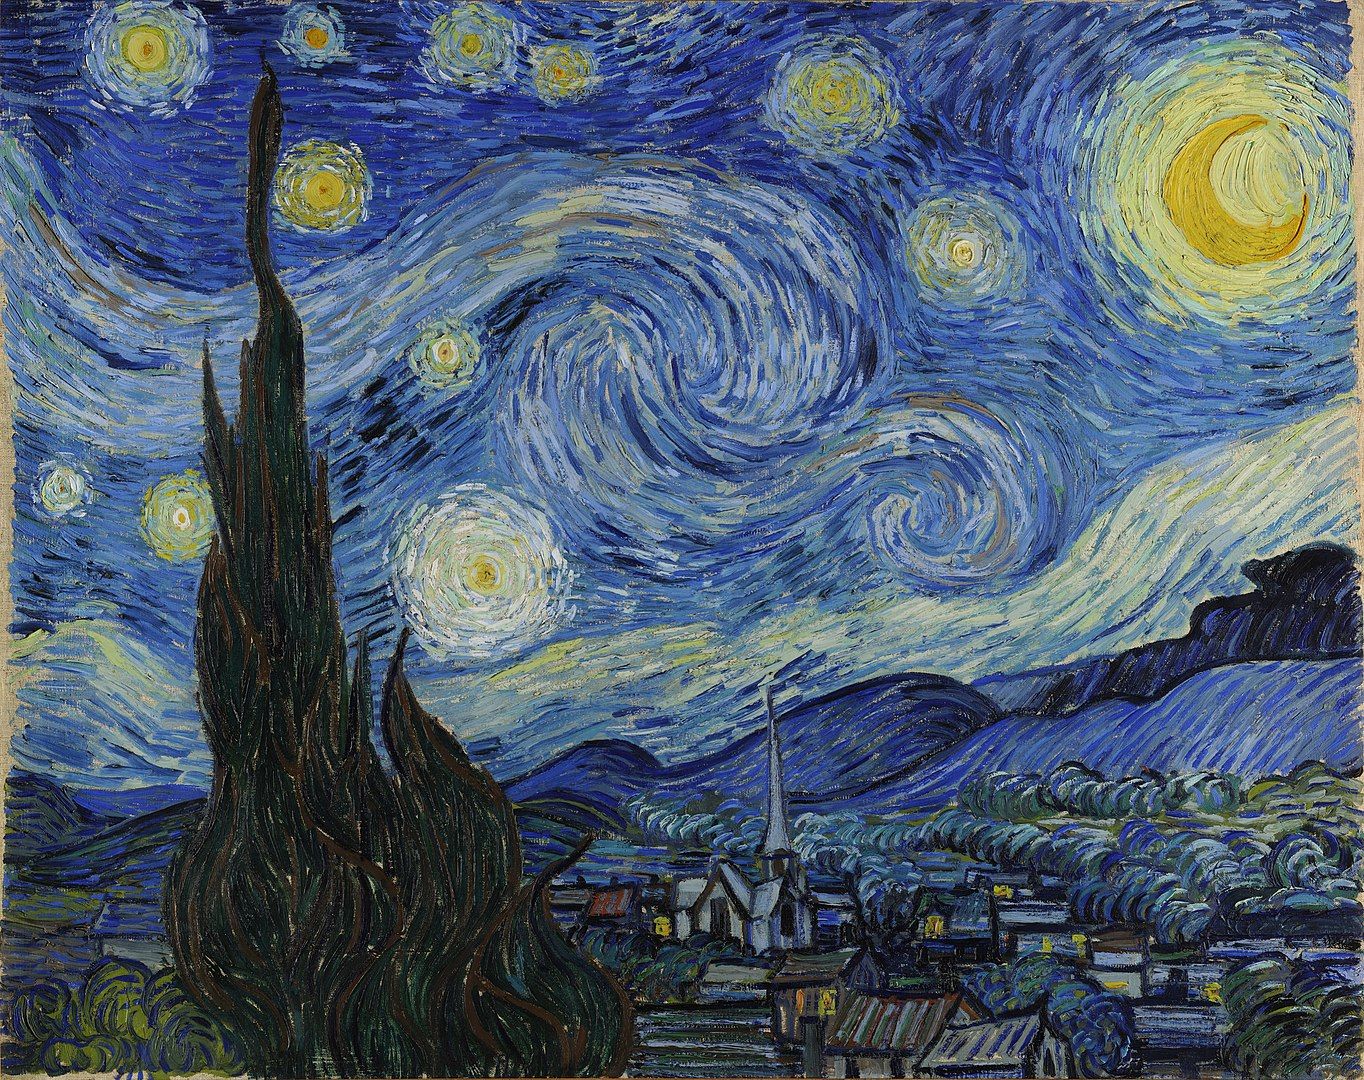 Van Gogh The Starry Night